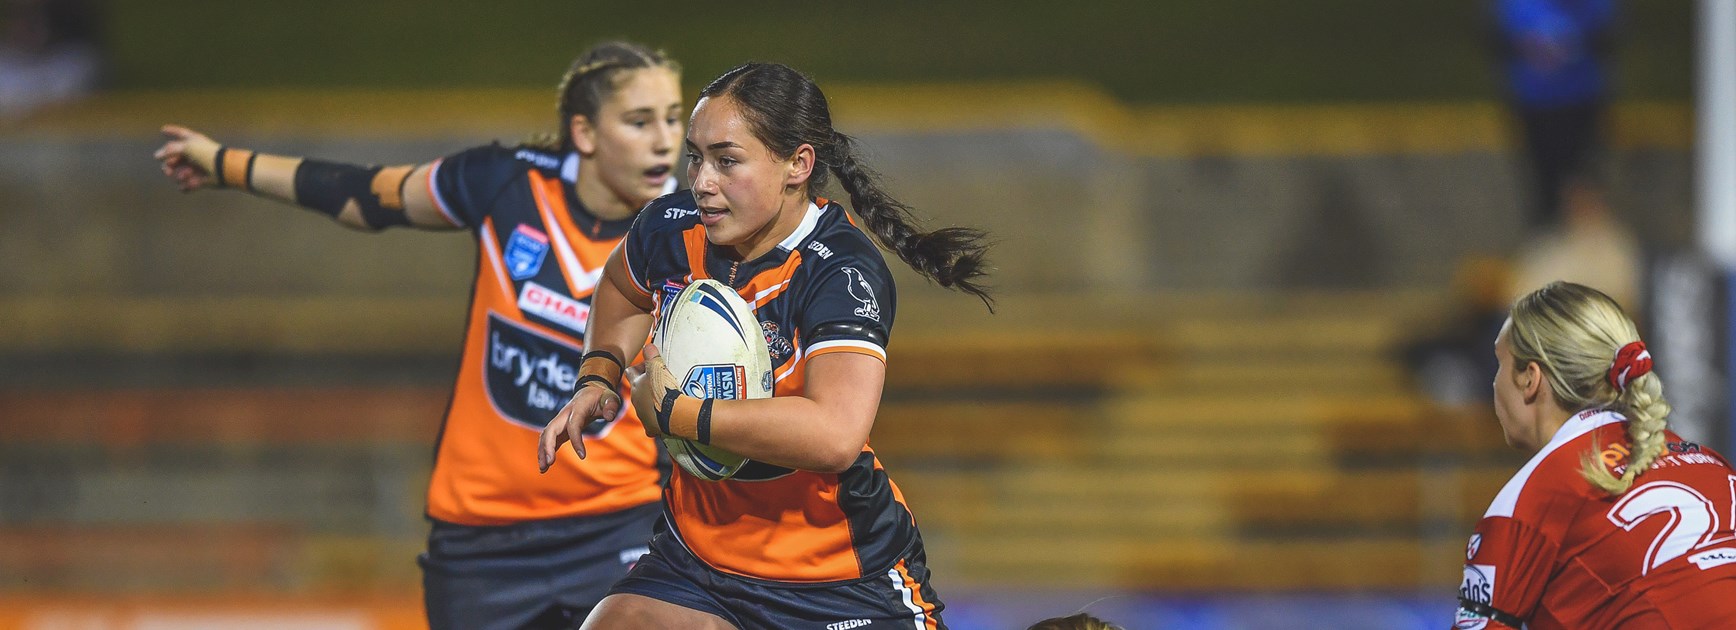 Wests Tigers duo named in NSW Women's U/19's